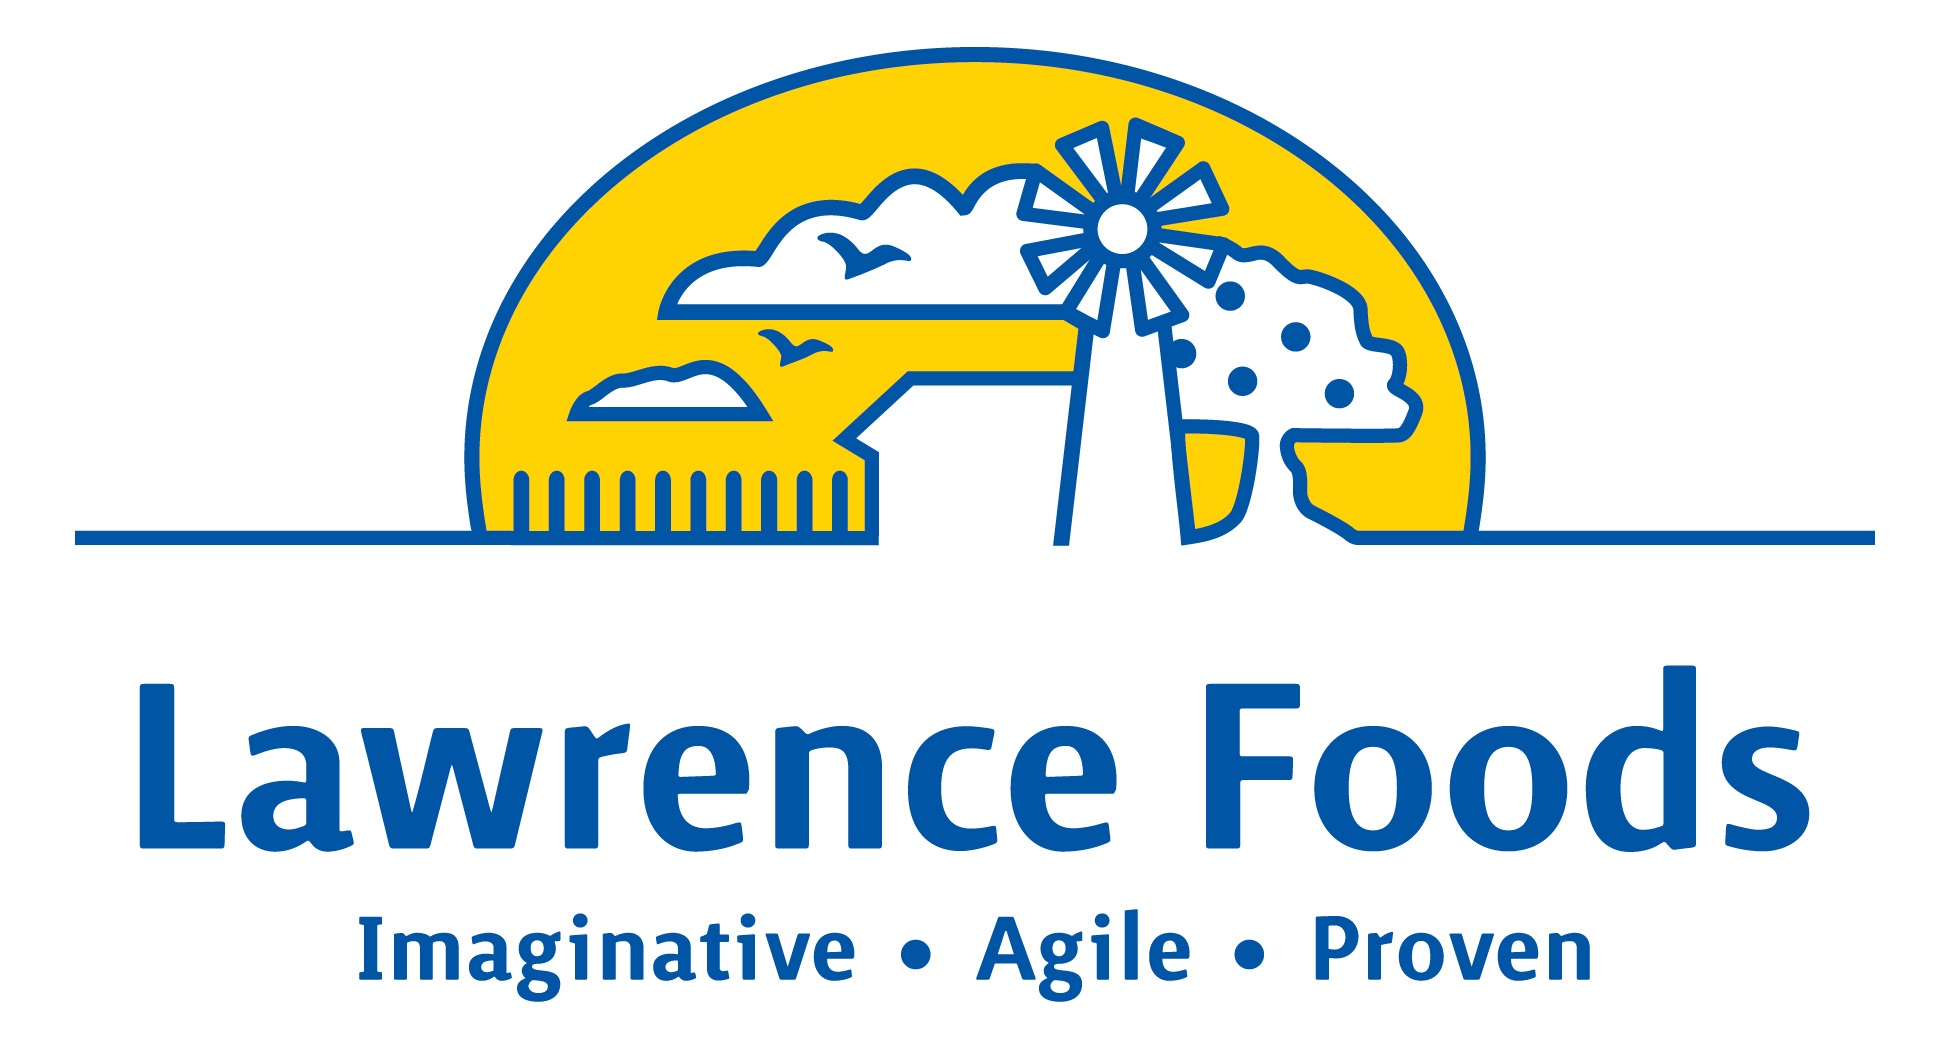 Lawrence Foods 300DPI